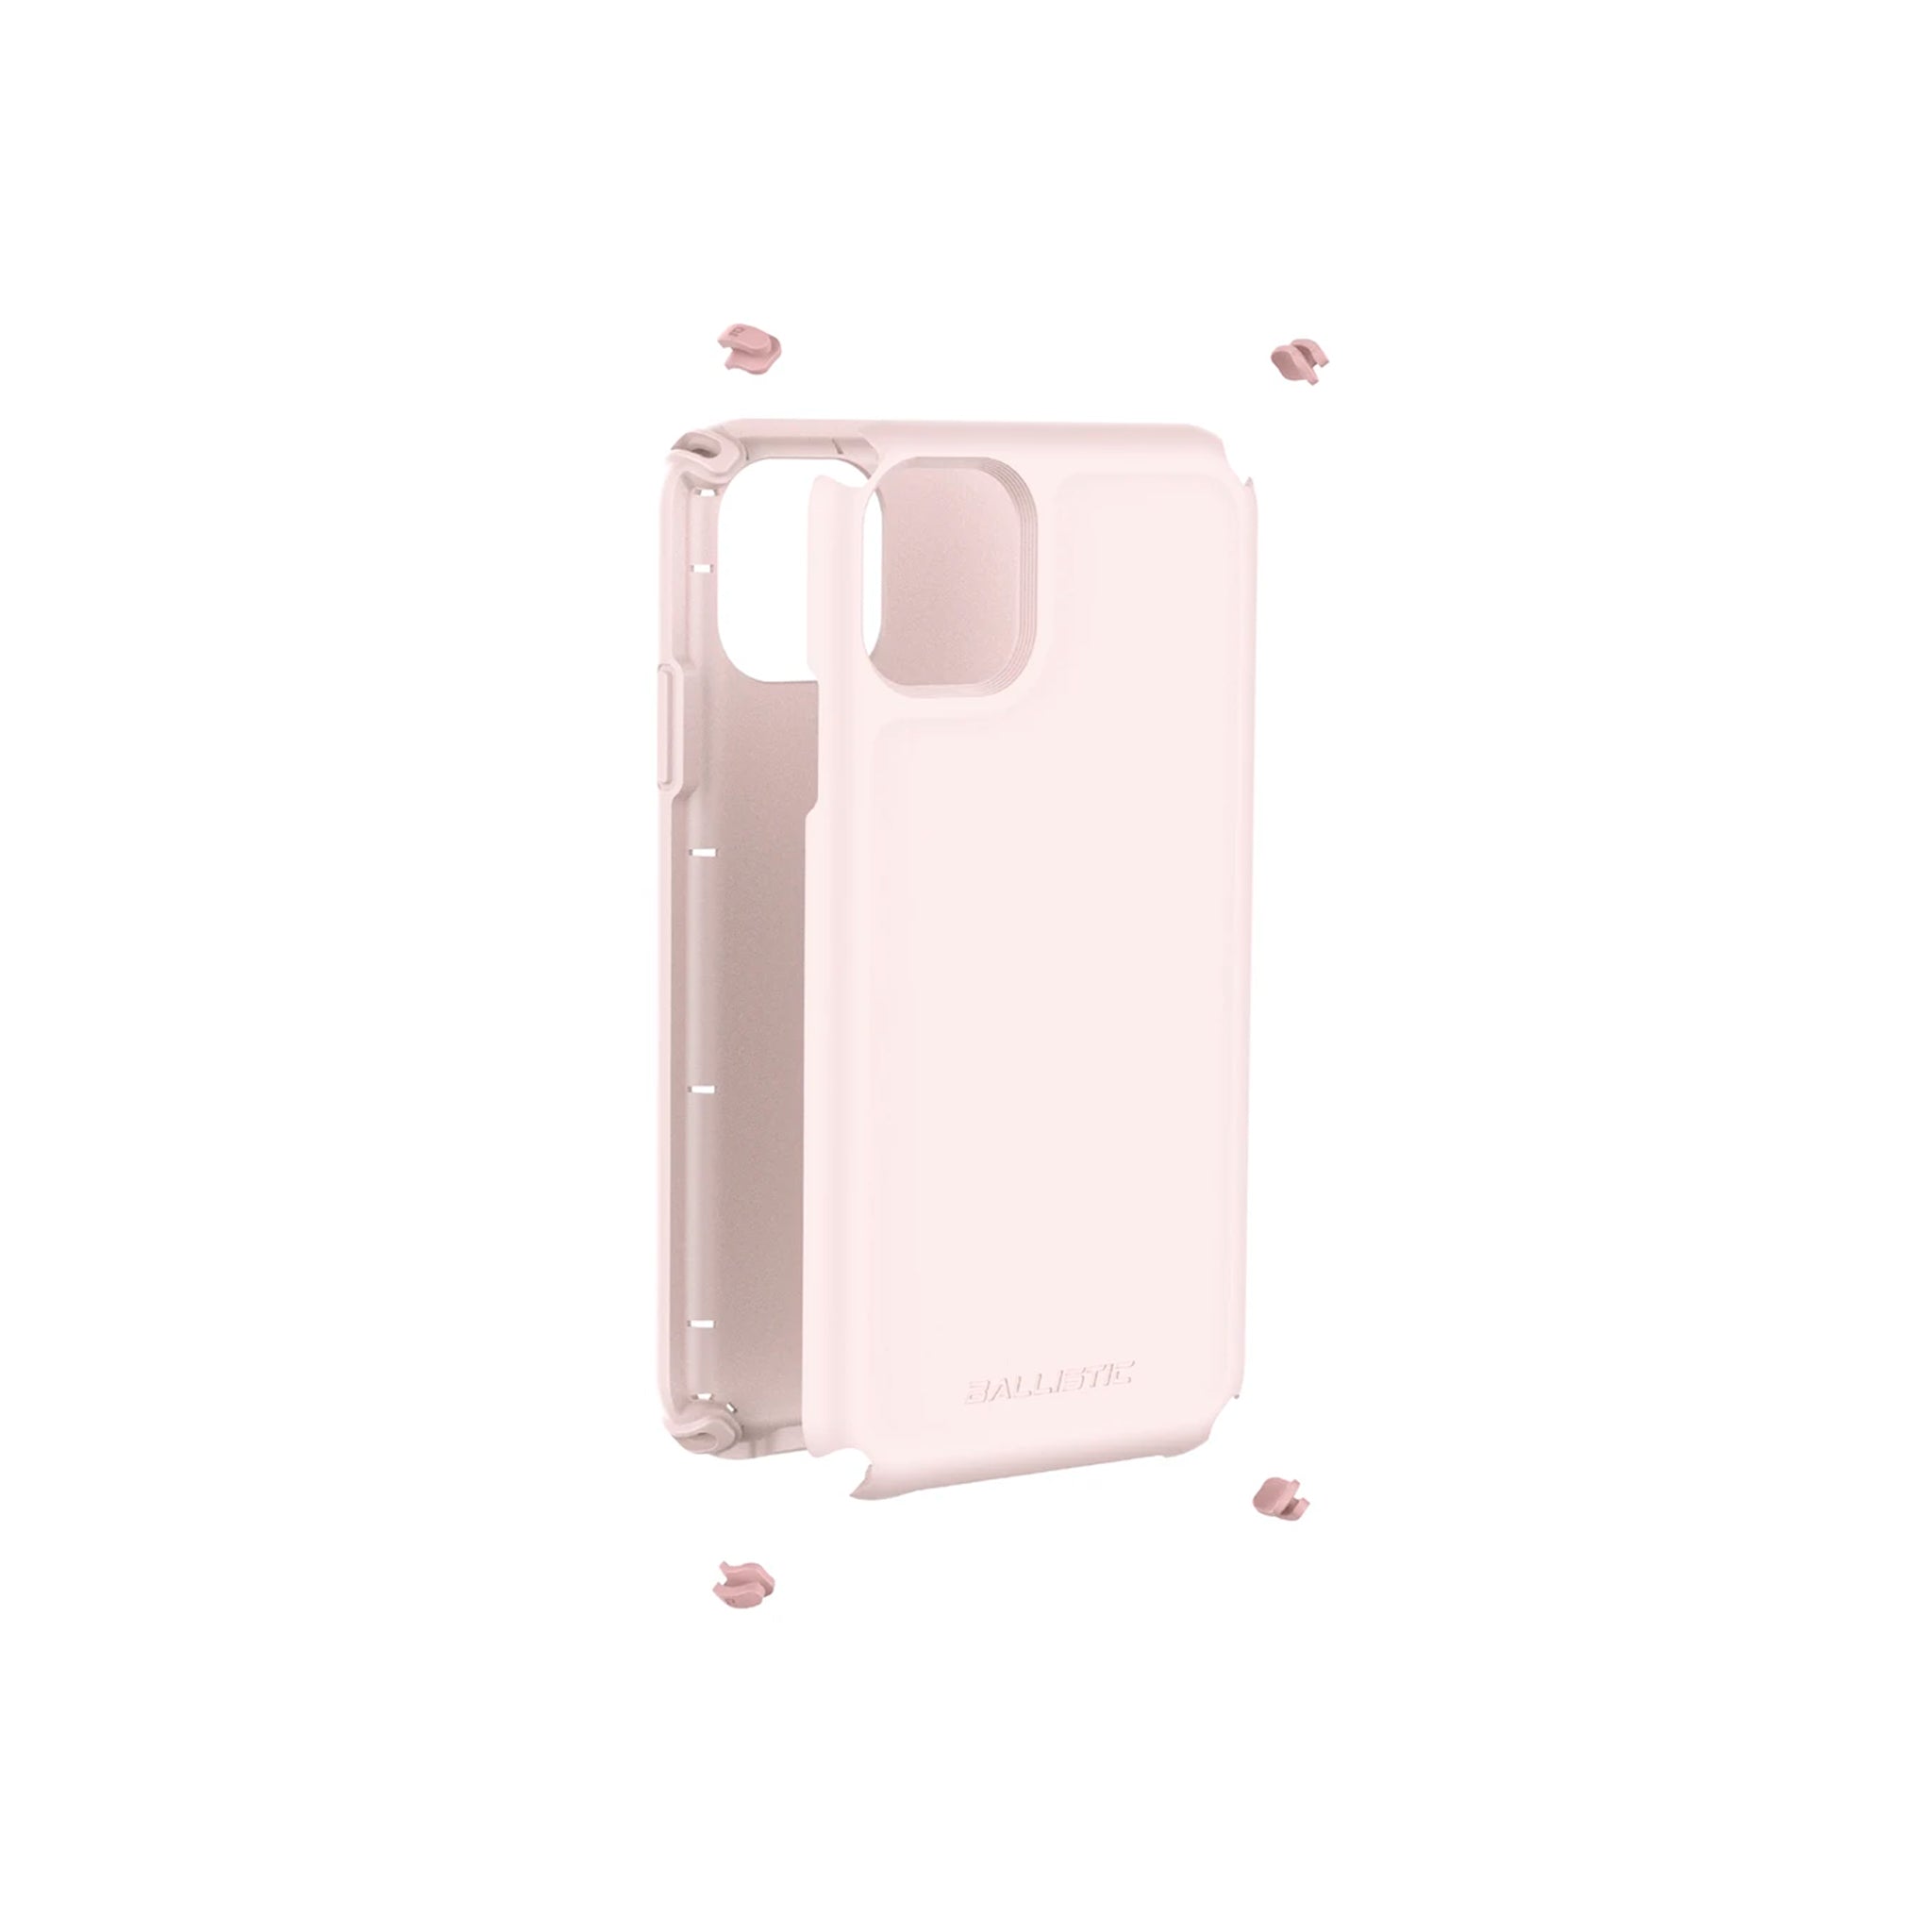 Ballistic - Urbanite Series For iPhone 11 Pro Max  - Pink